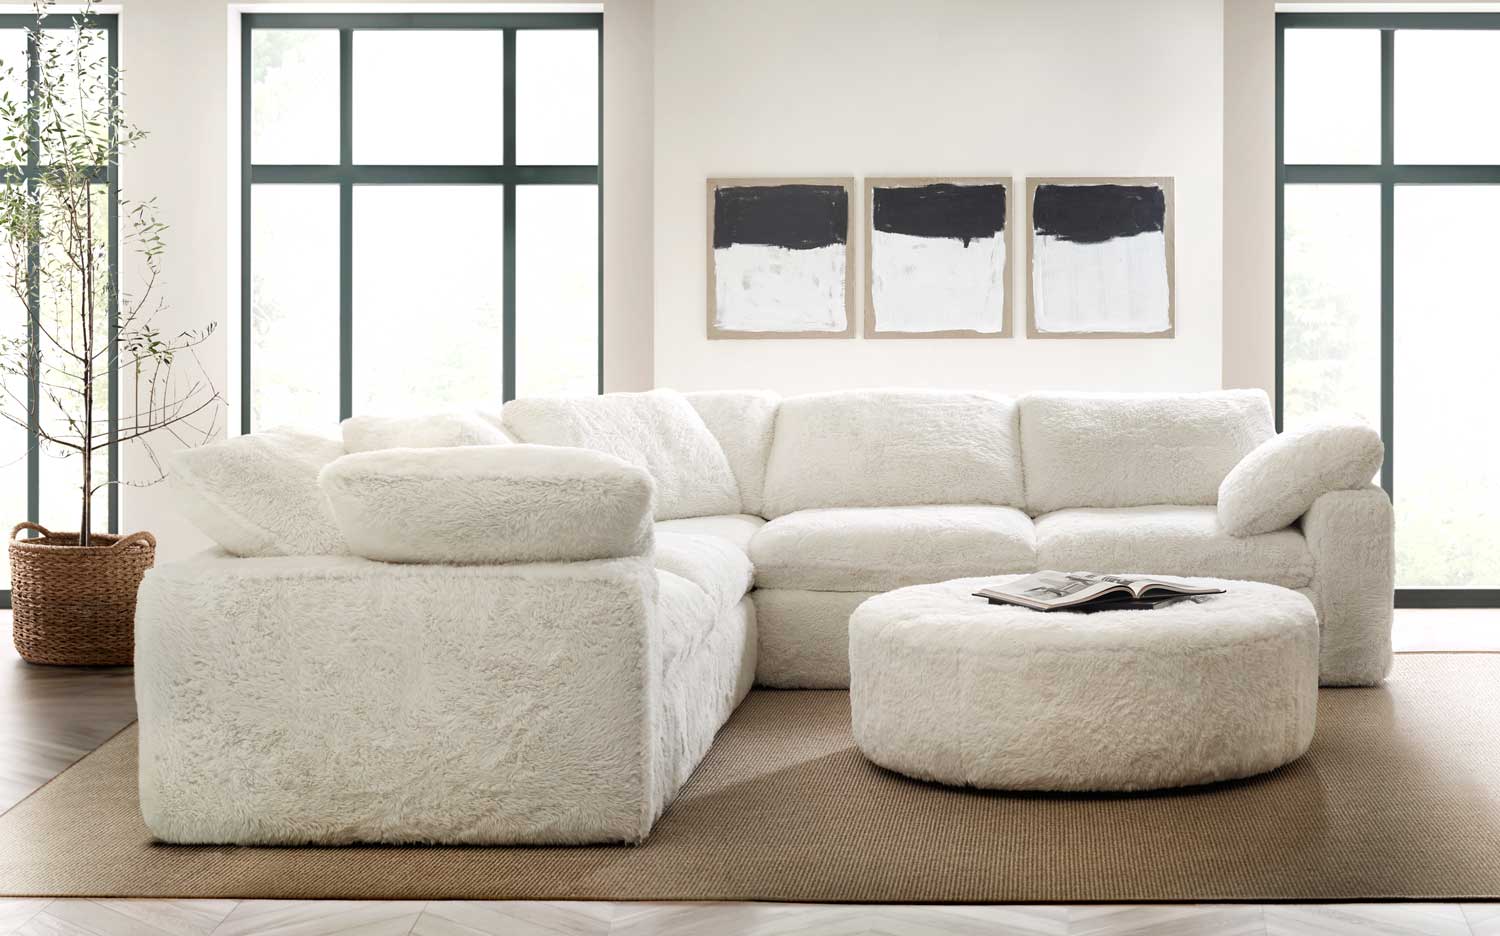 Cozy Wellness Furniture And Decor